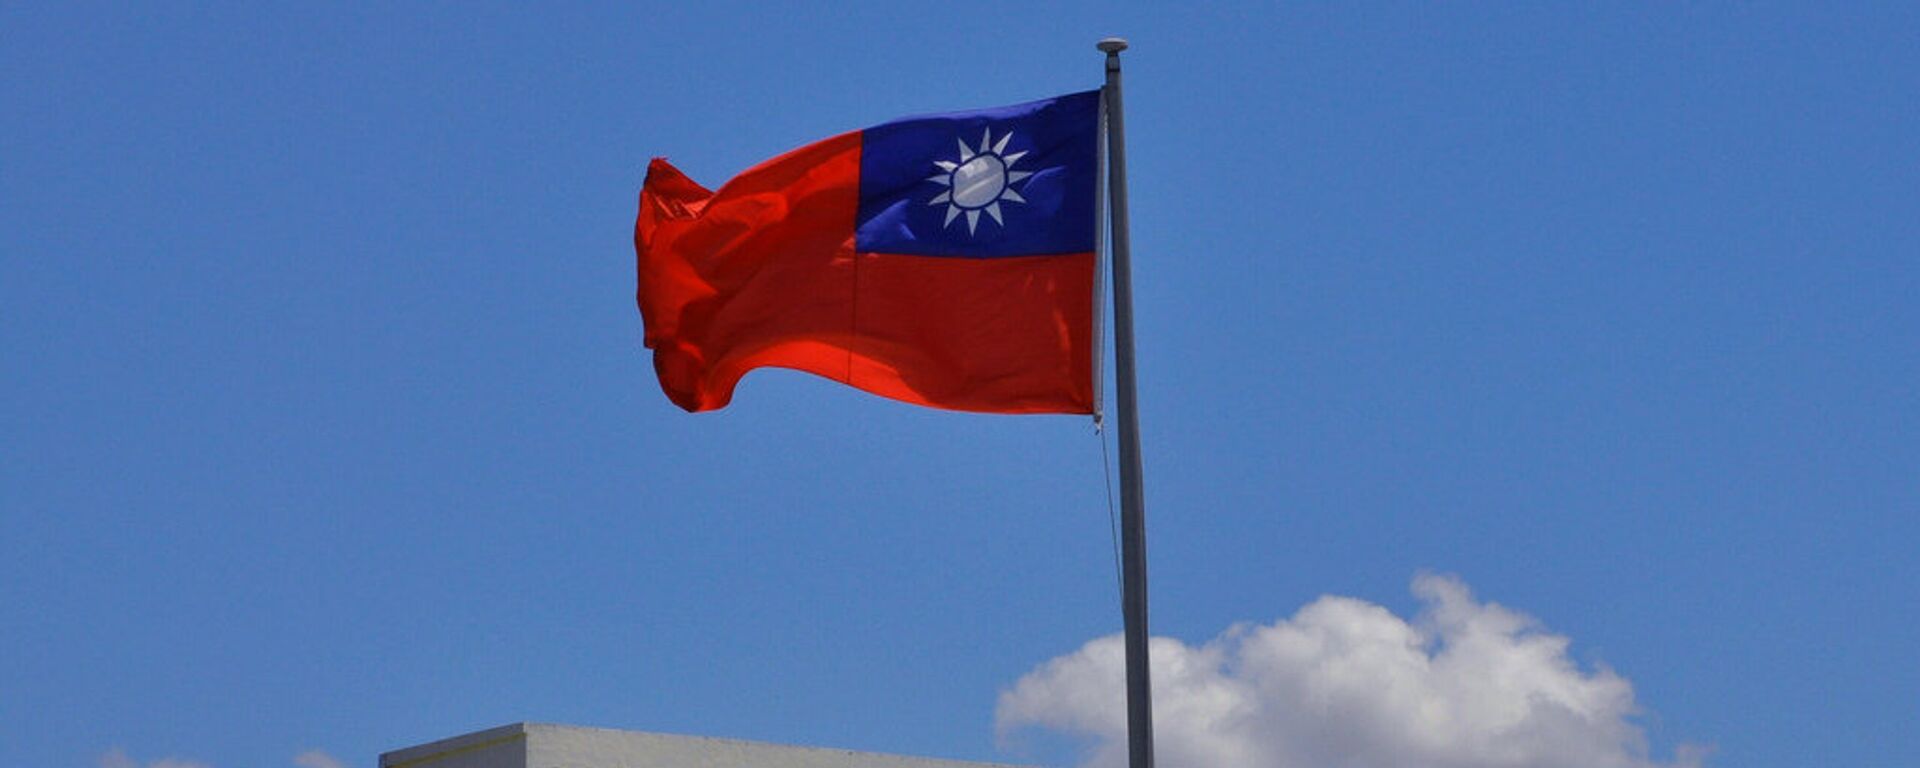 台湾の国旗 - Sputnik 日本, 1920, 07.04.2022